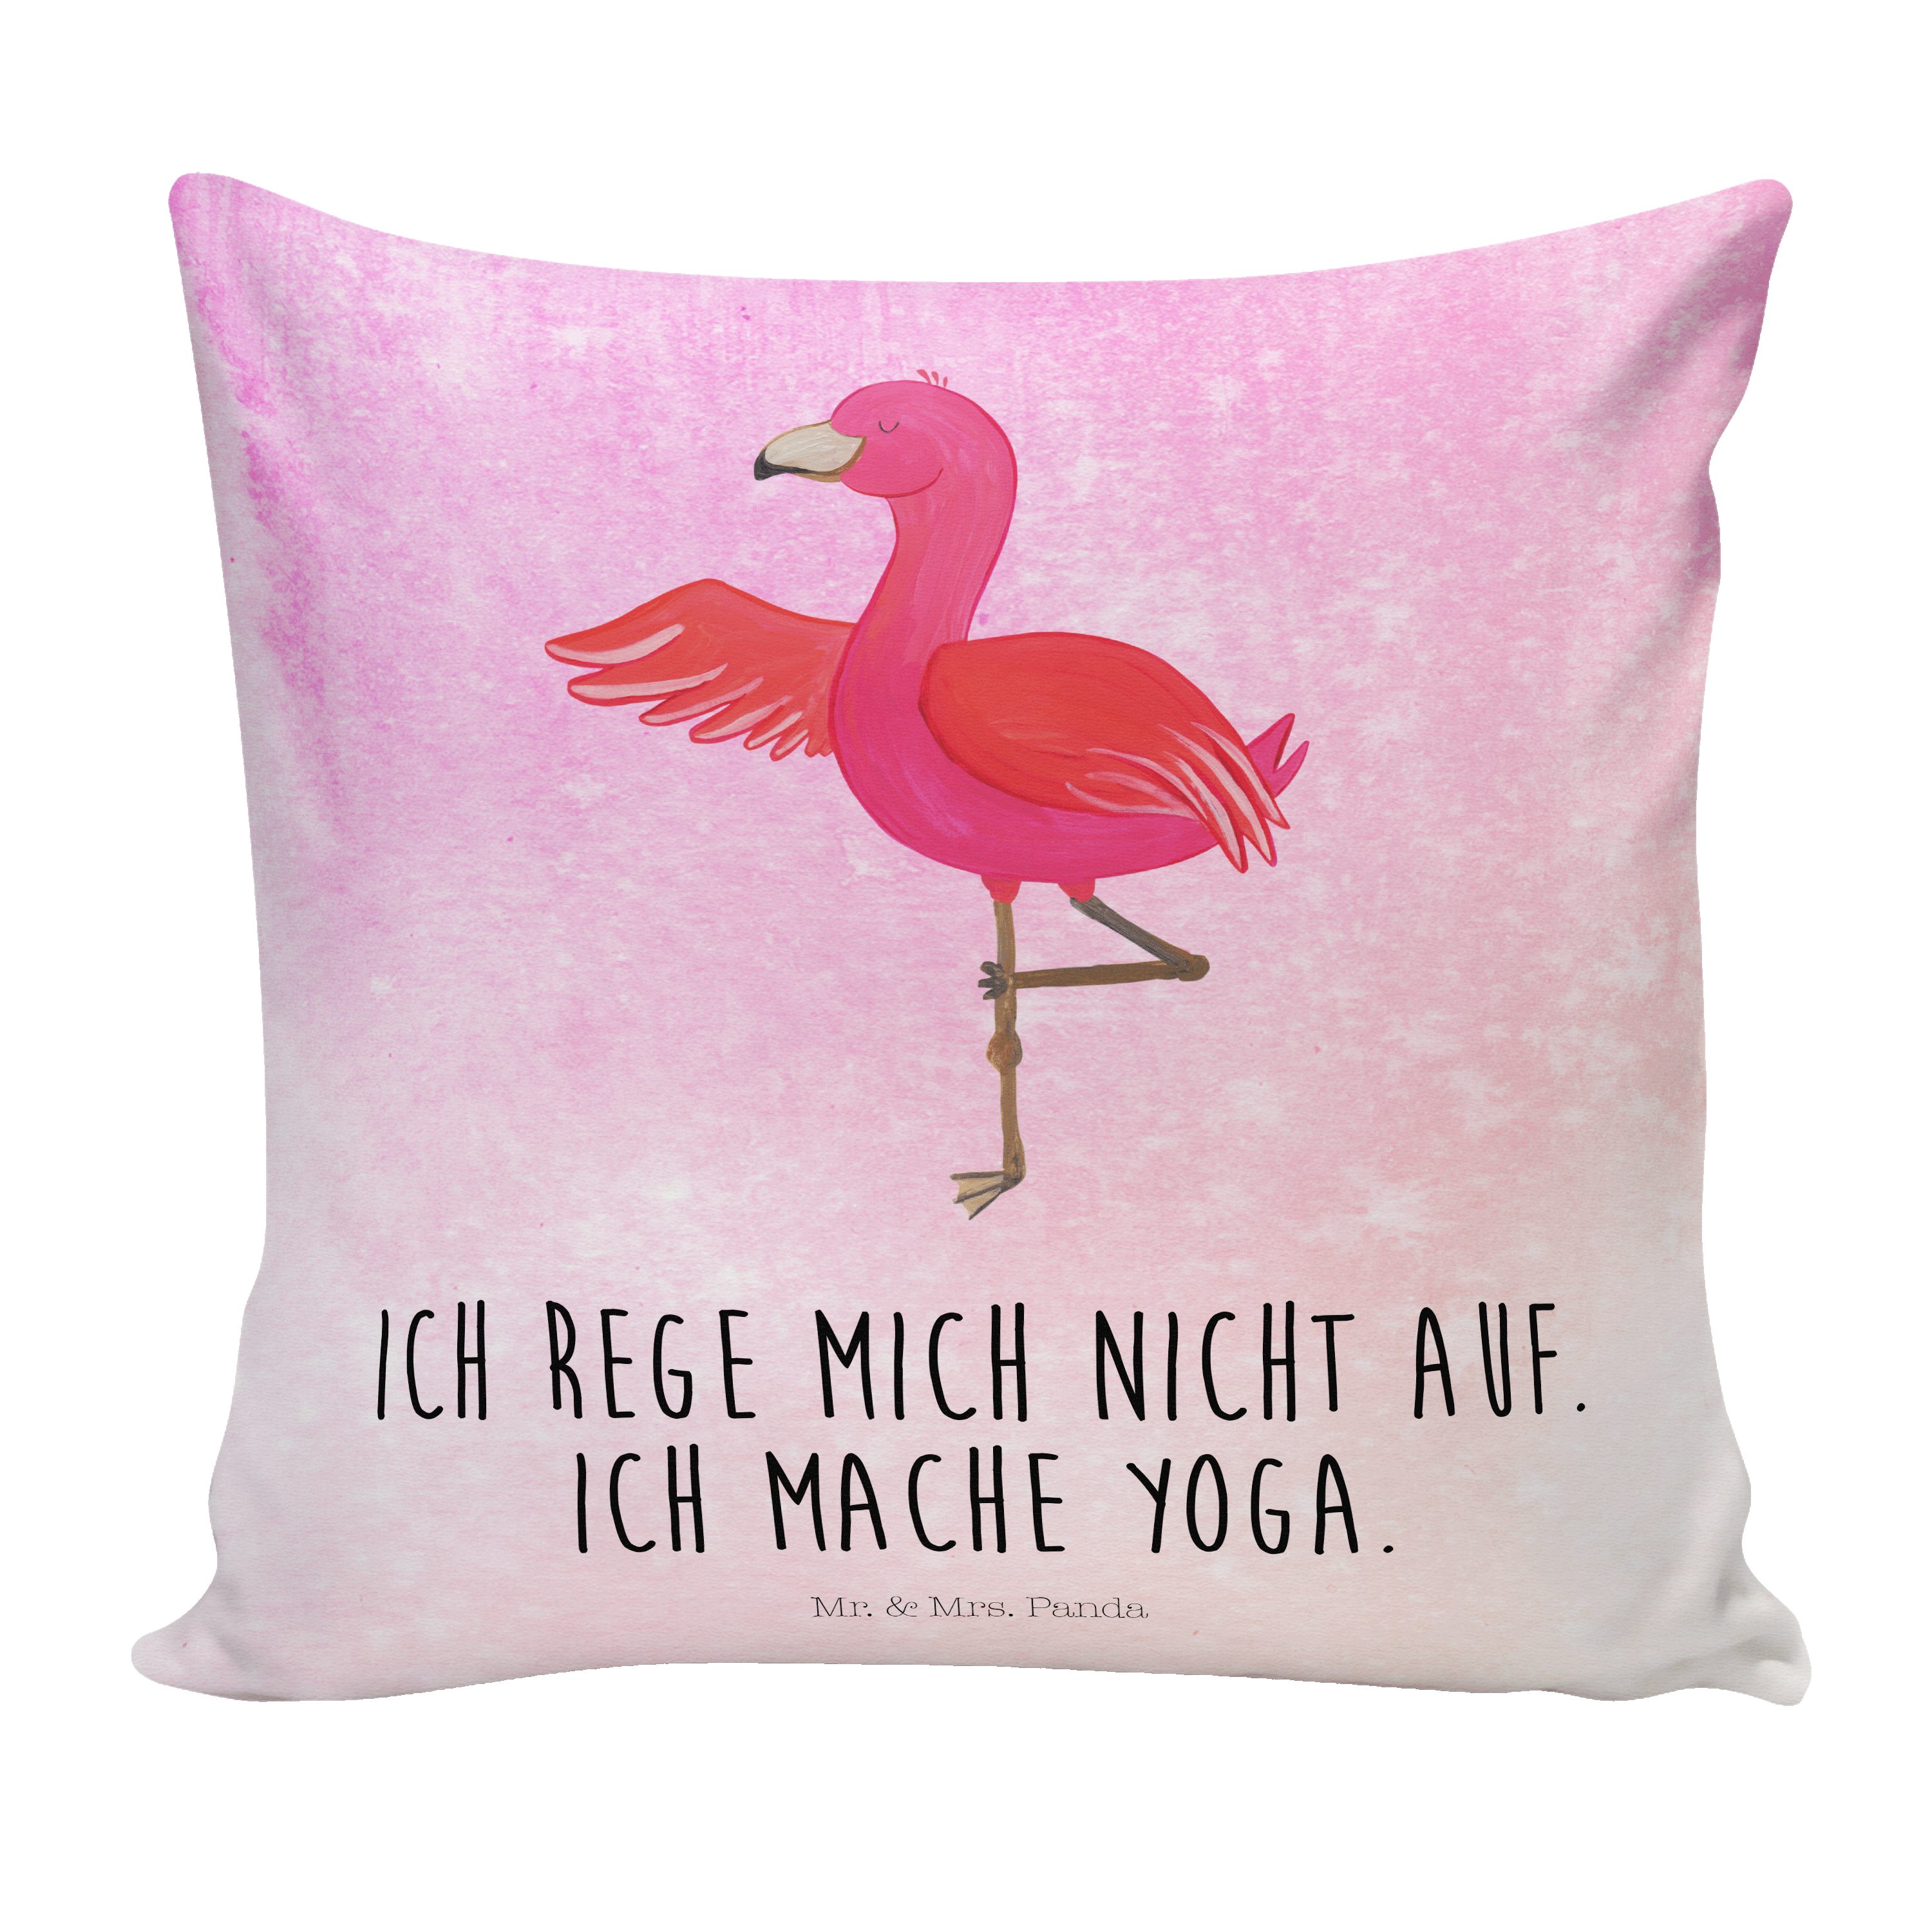 Mr. & Mrs. Panda Dekokissen Flamingo Yoga - Aquarell Pink - Geschenk, Entspannung, entspannt, Dek